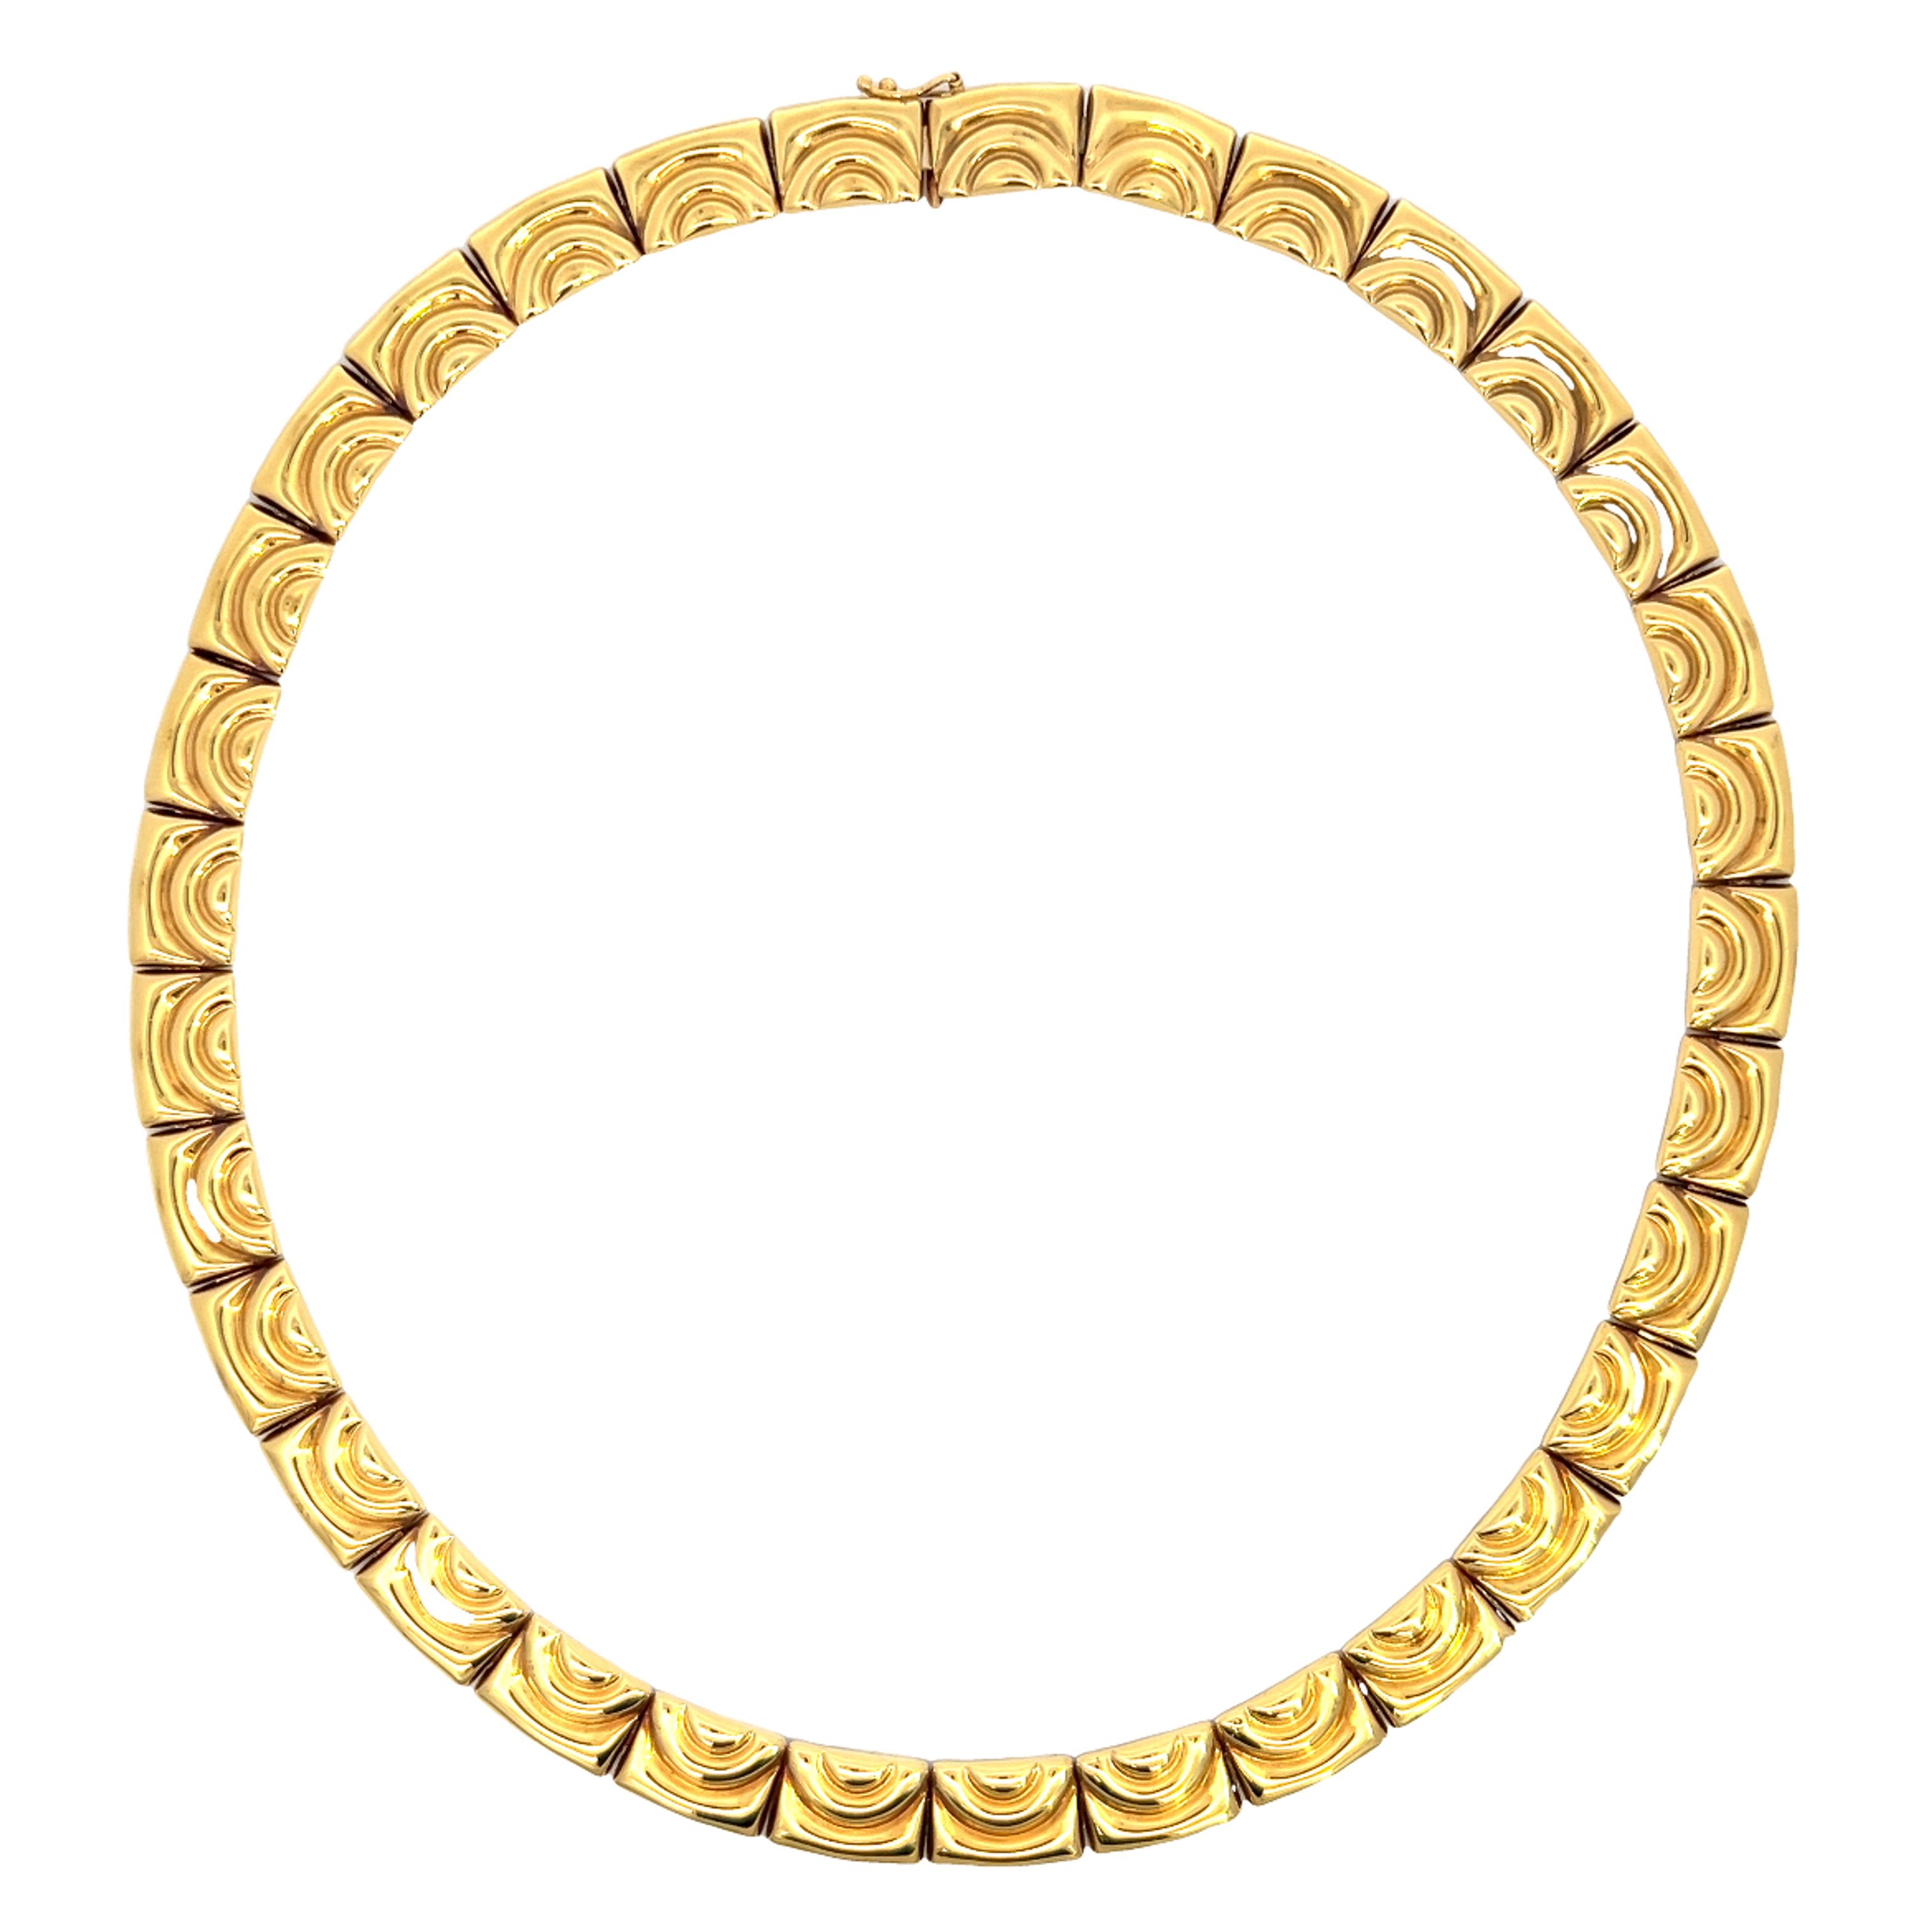 A Stunning 18 Carat Gold Collar